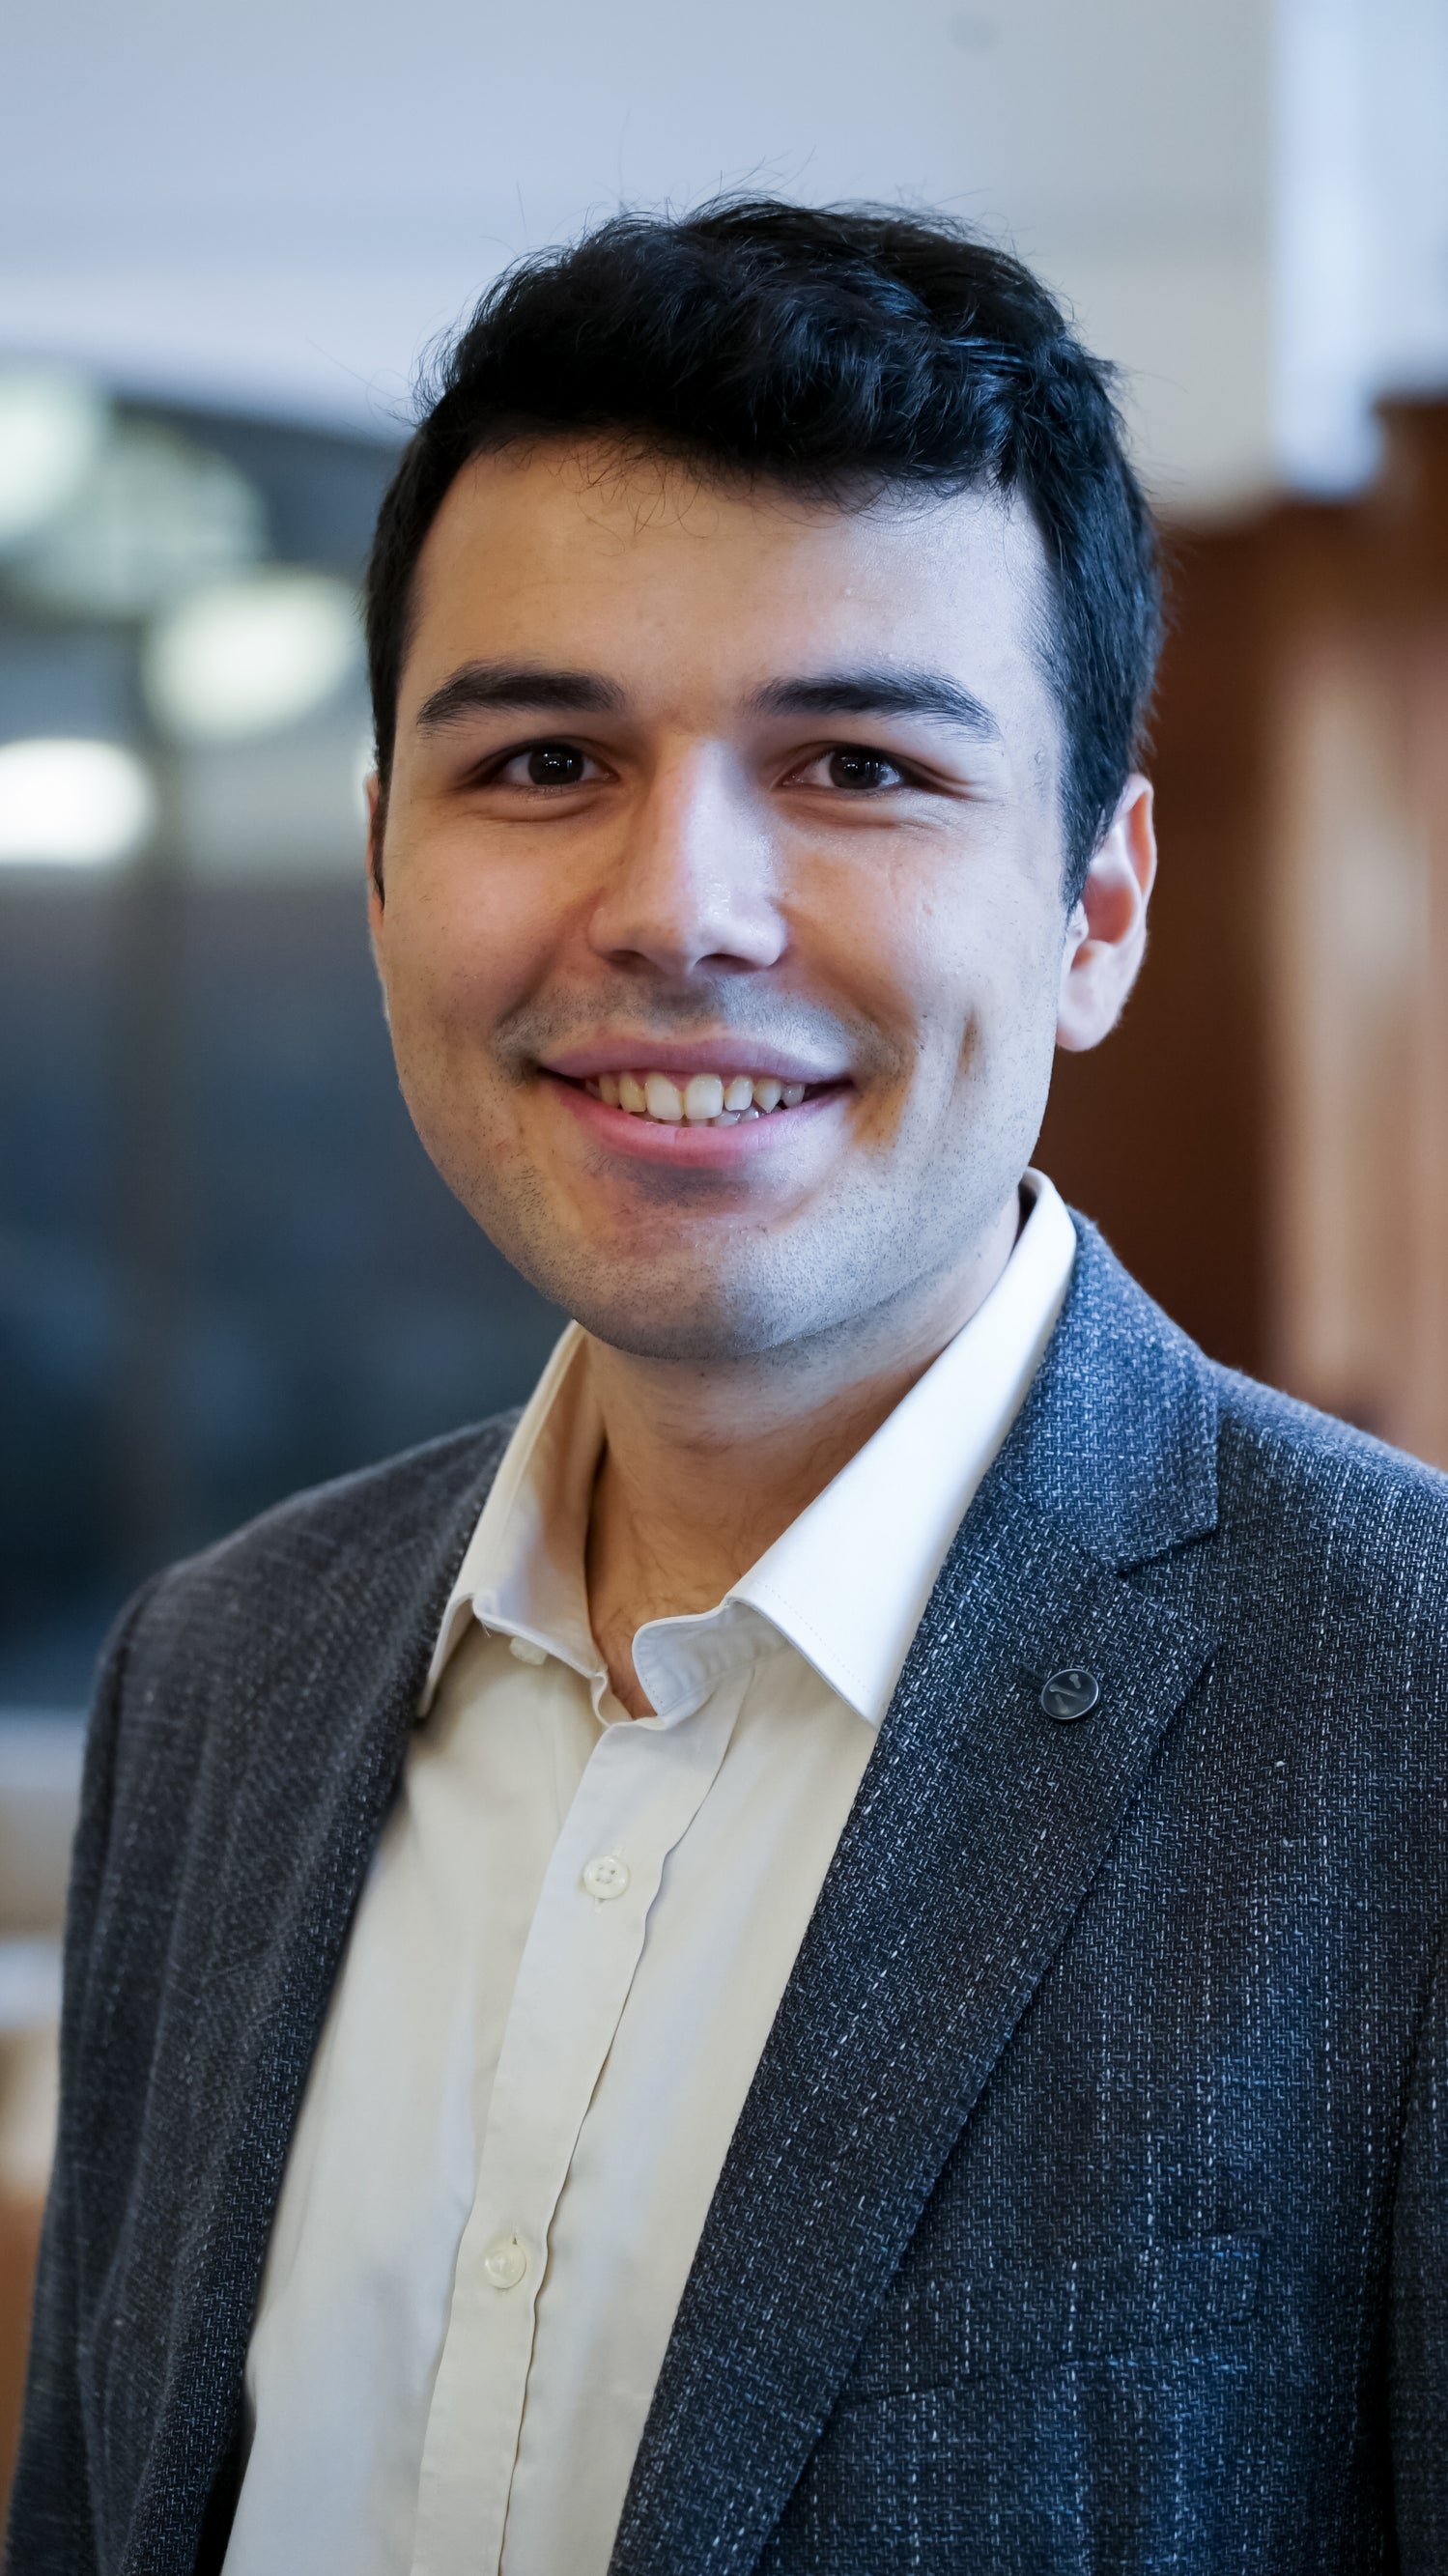 Mert Akman, graduate student ambassador at Rice University